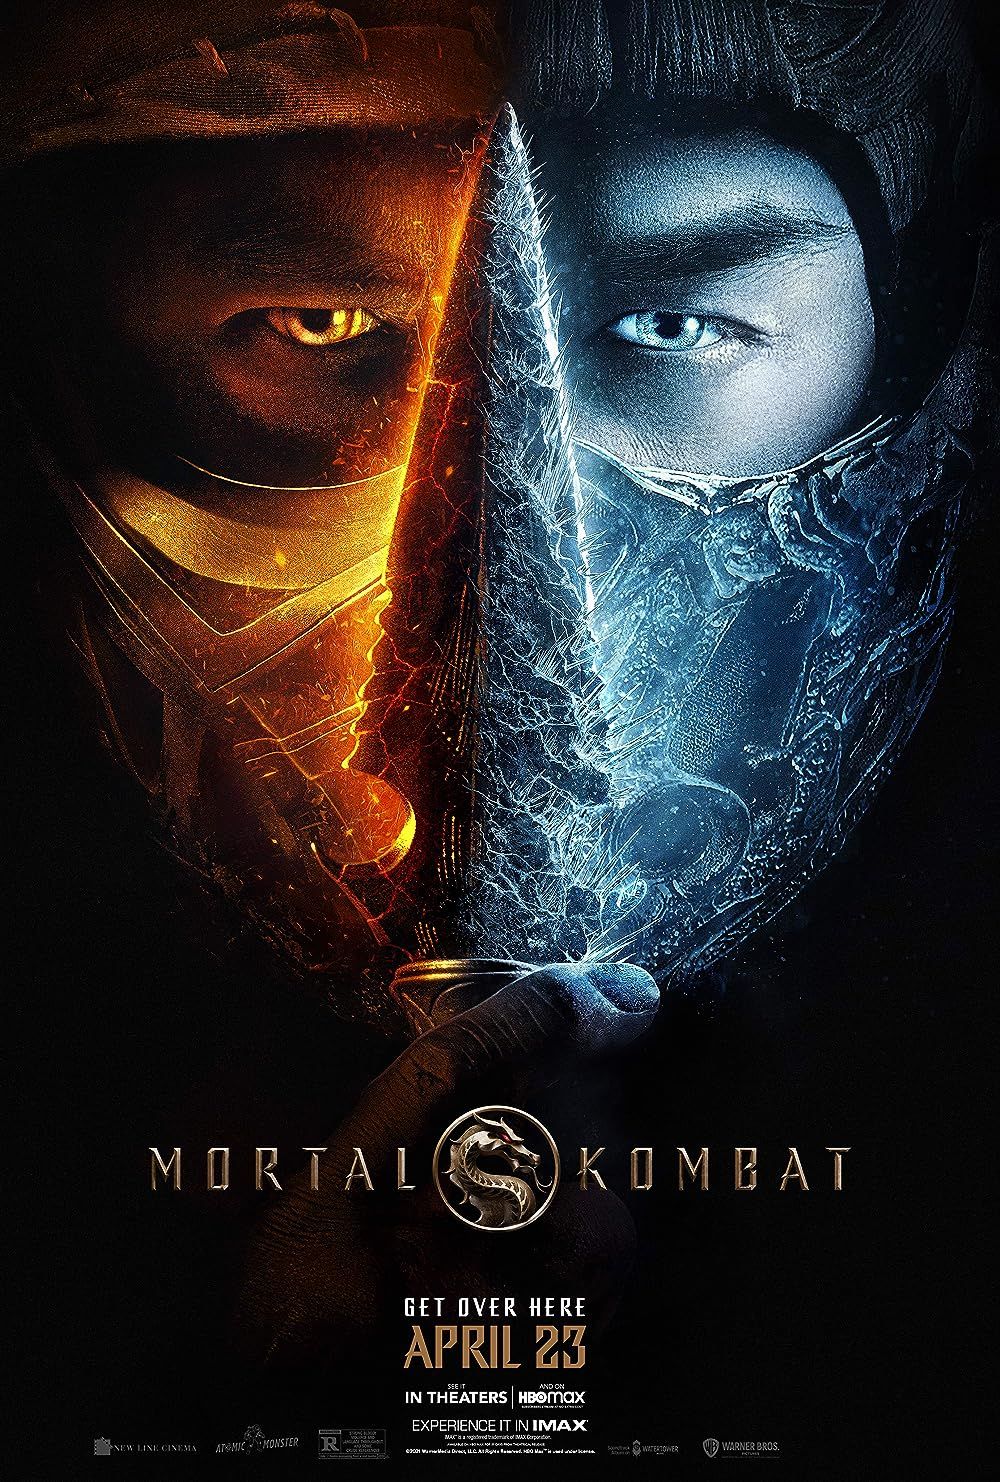 Mortal Kombat 2 Producer Shares Photo of Cast